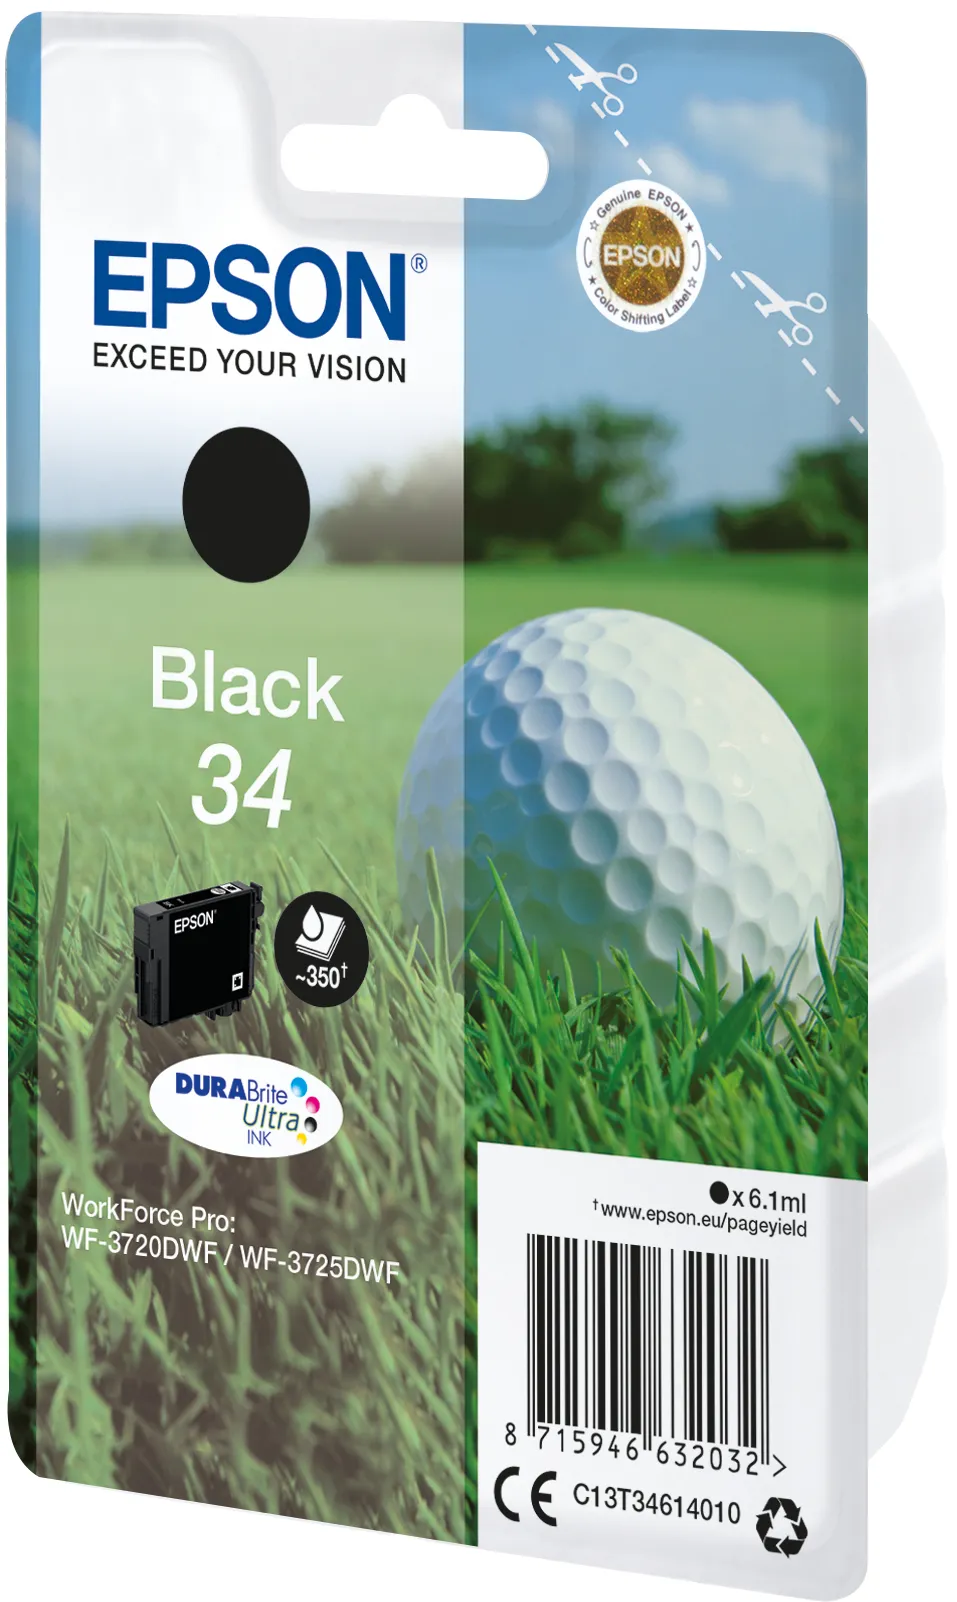 Vente Epson Golf ball Singlepack Black 34 DURABrite Ultra Epson au meilleur prix - visuel 4